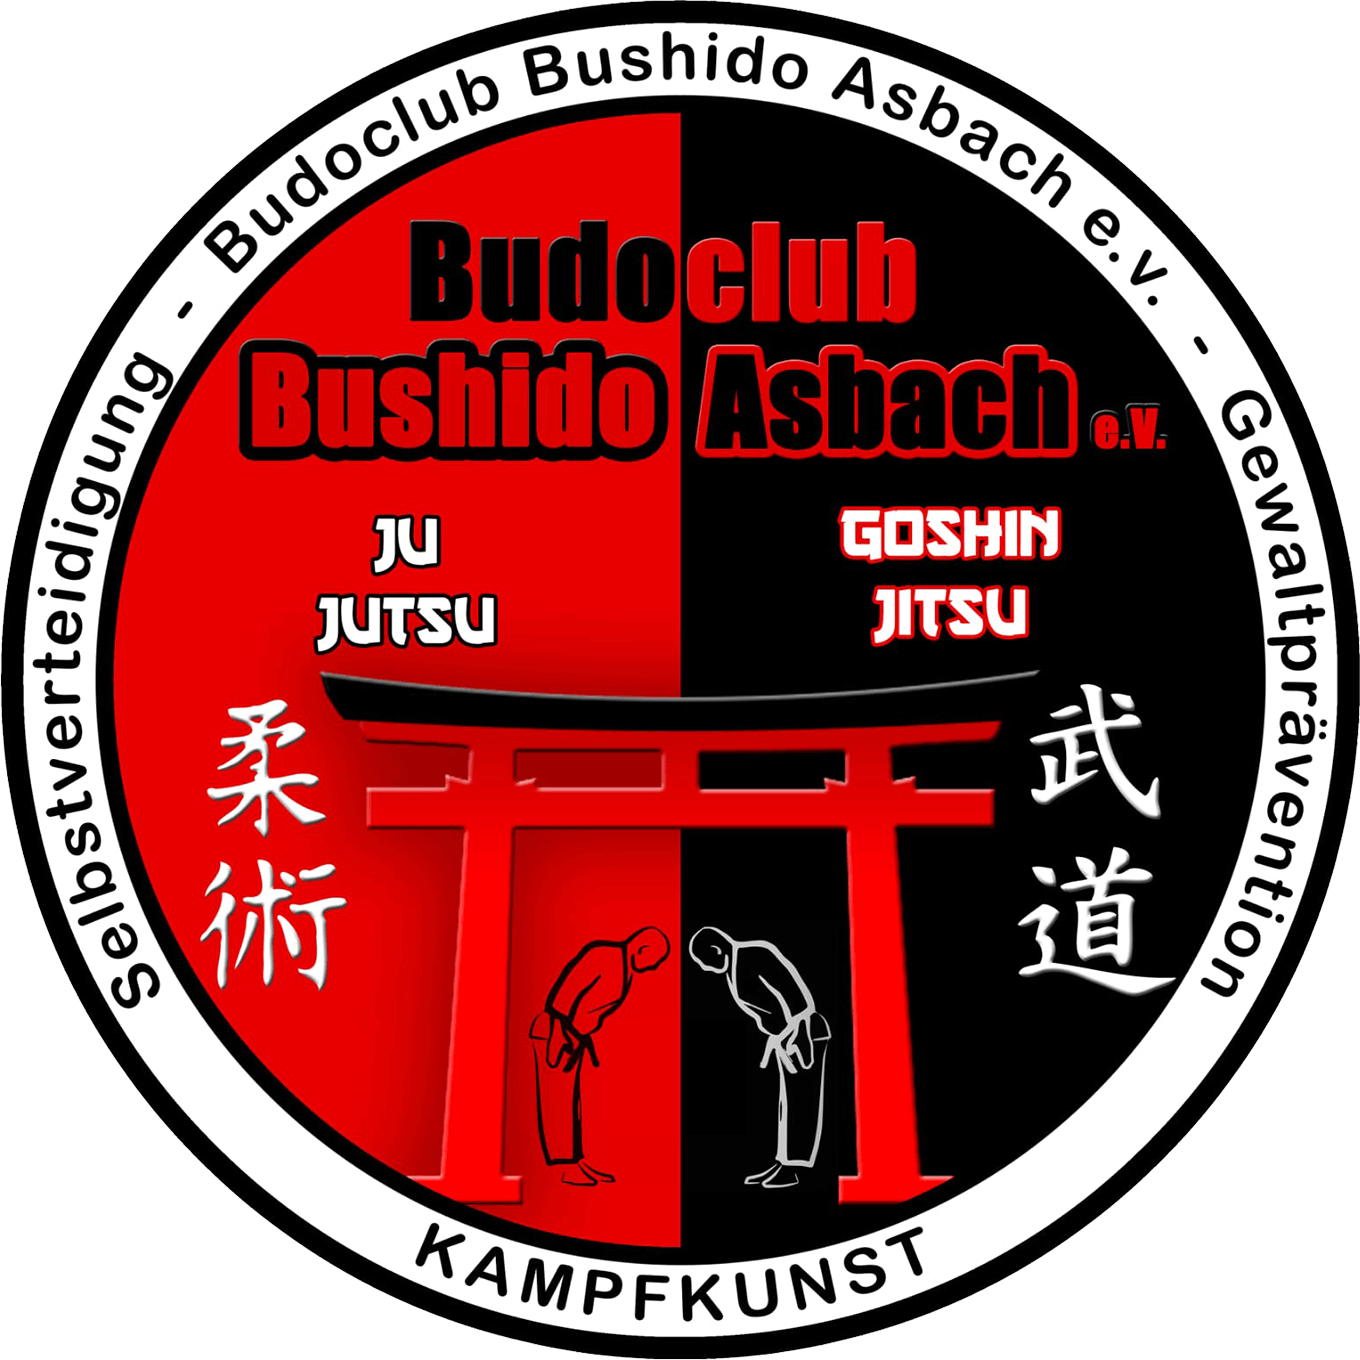 Budoclub Bushido Asbach Logo